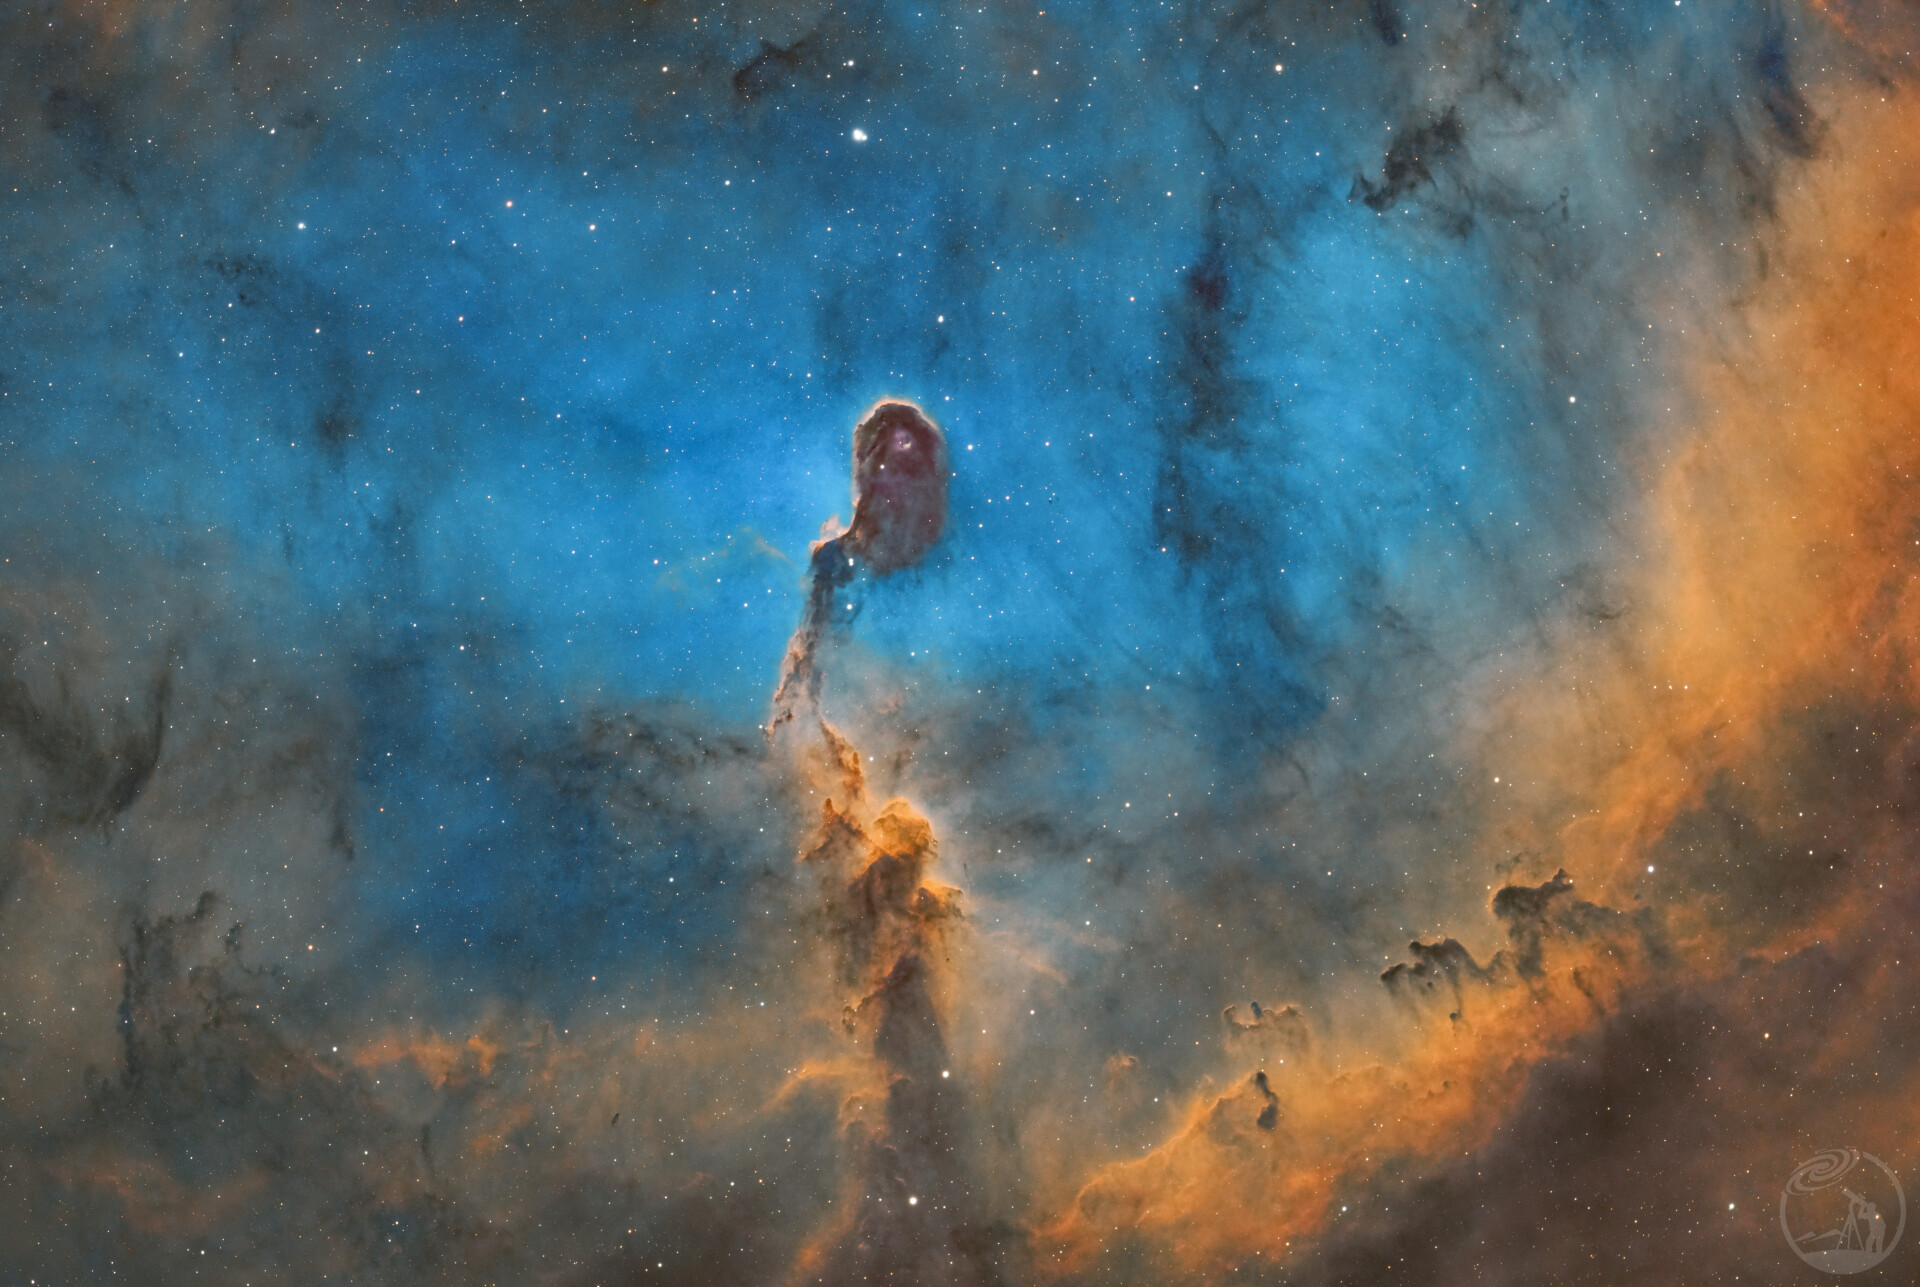 IC1396象鼻星云